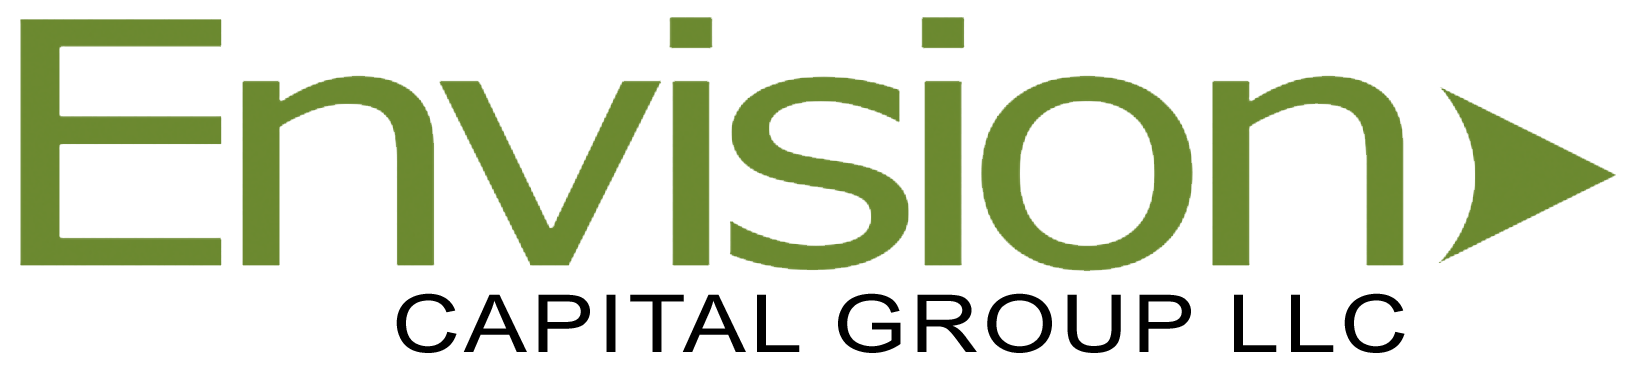 Envision Capital Group LLC Logo